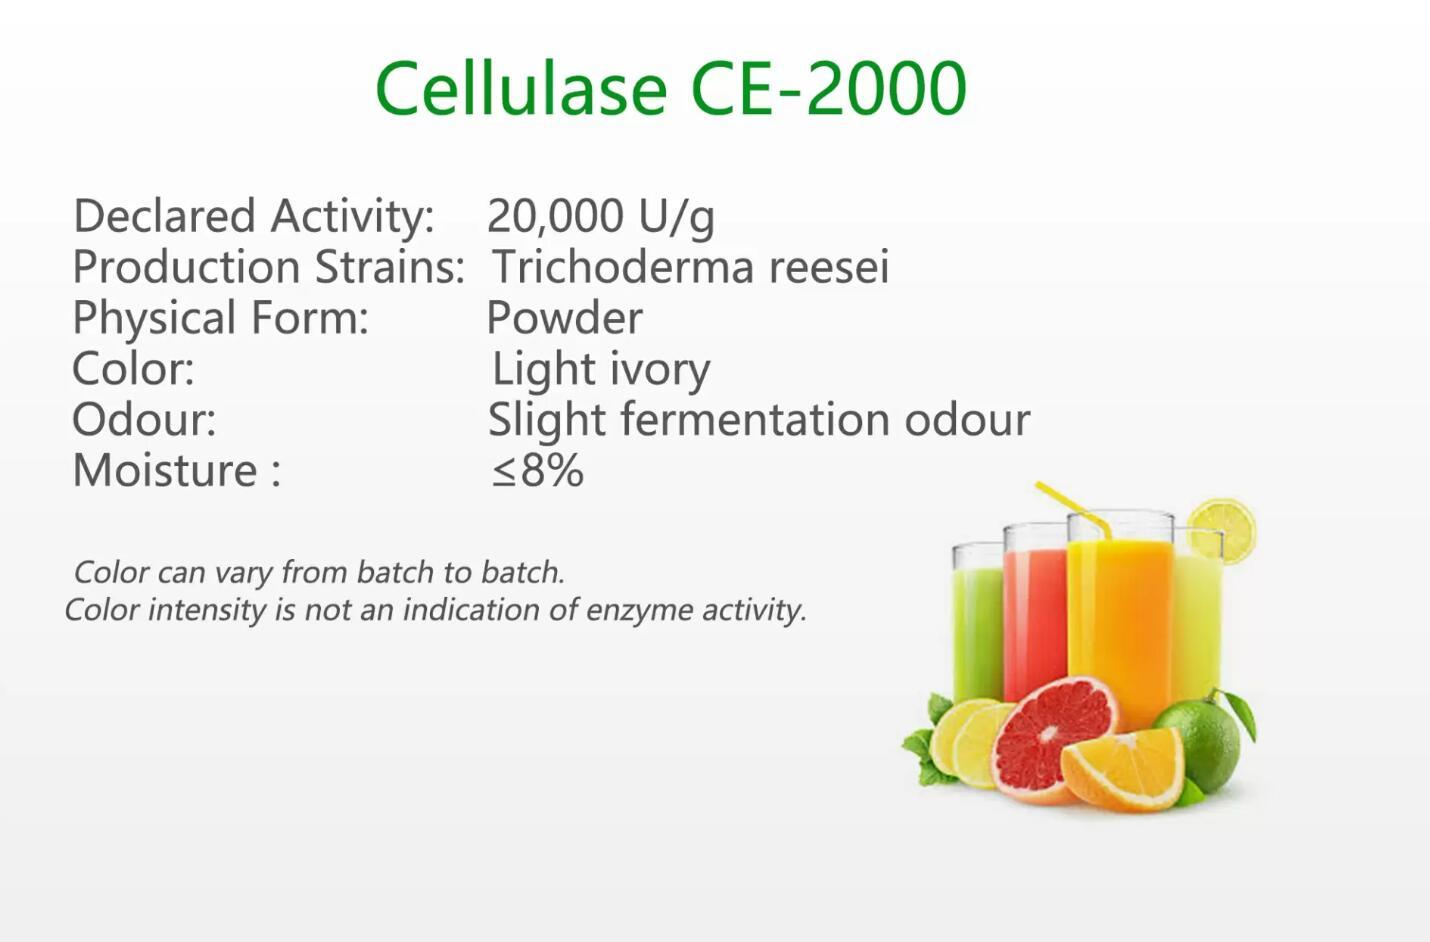 Cellulase CE-2000